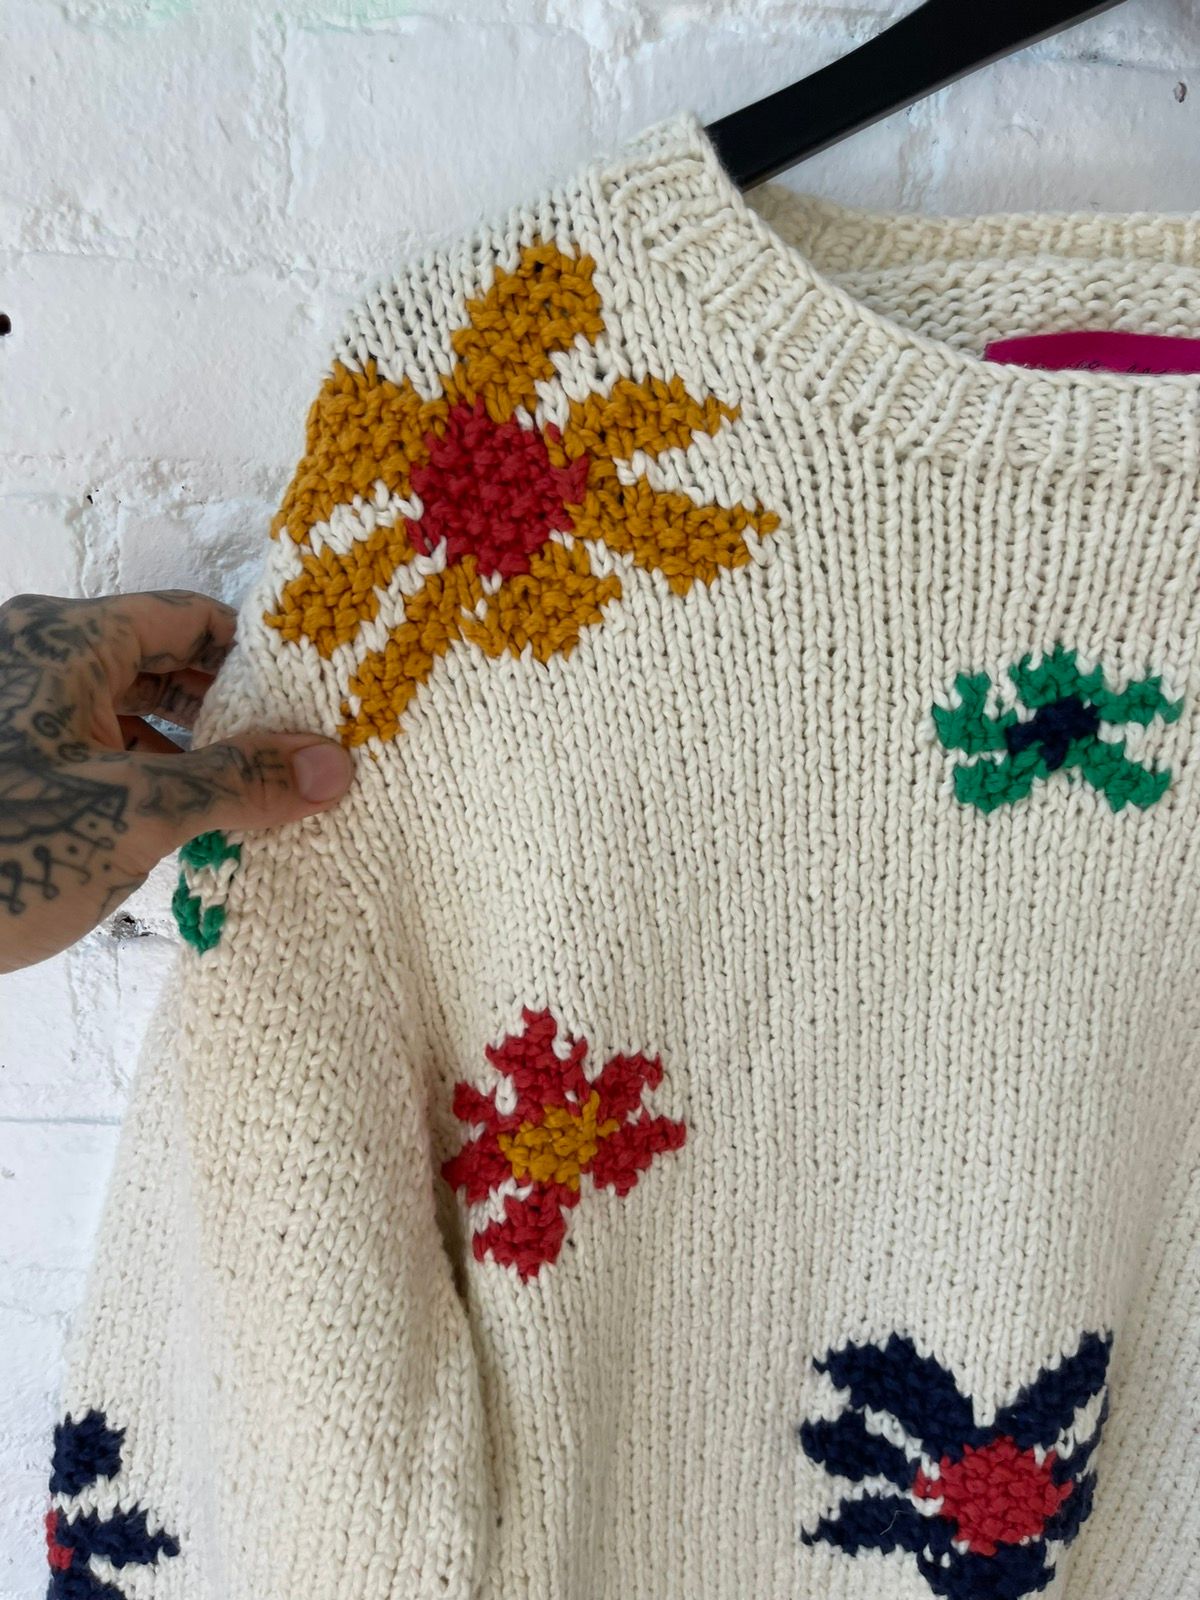 Elder Statesman NEW HAND KNIT Flower Floral Sweater